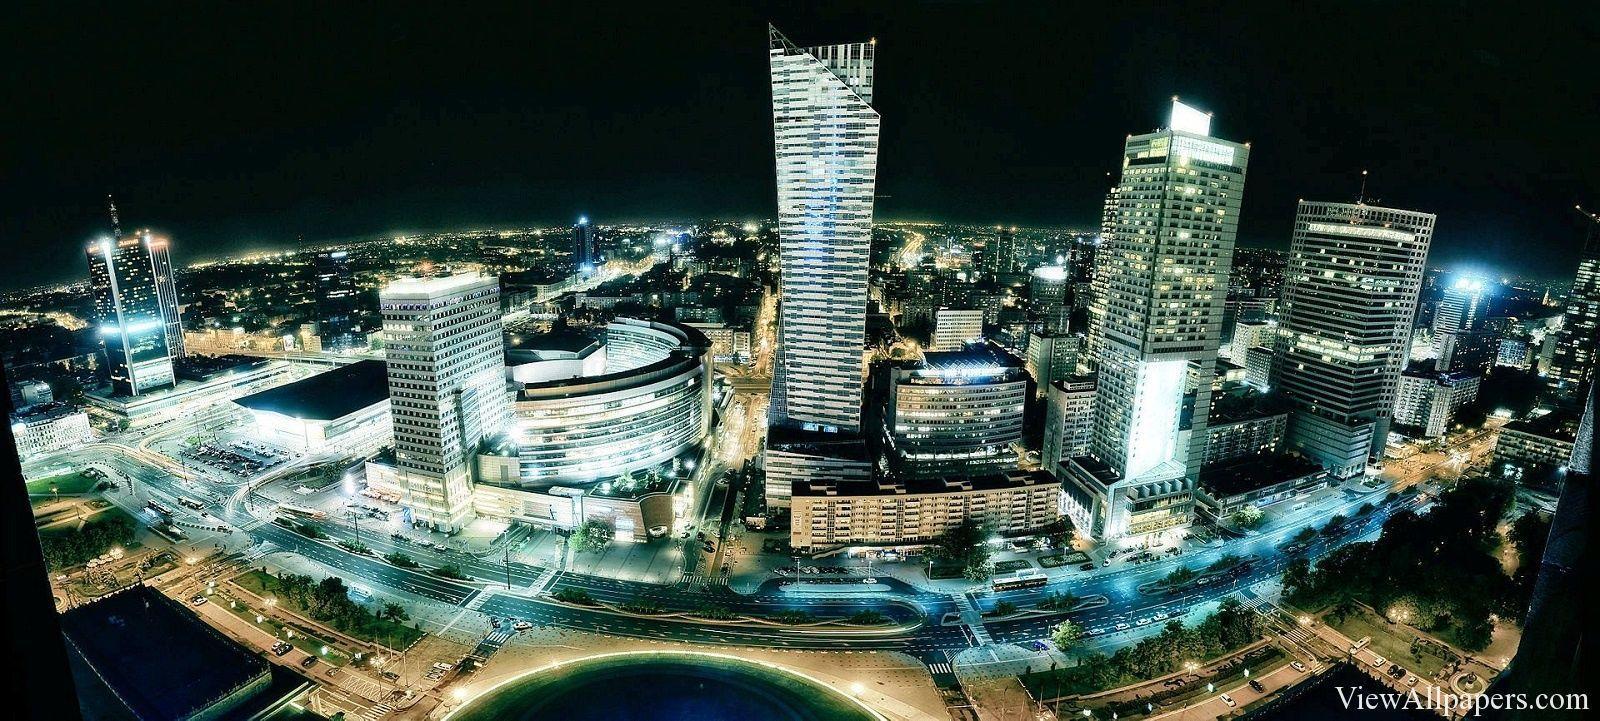 Warsaw Poland Skyline At Night. Viewallpaper